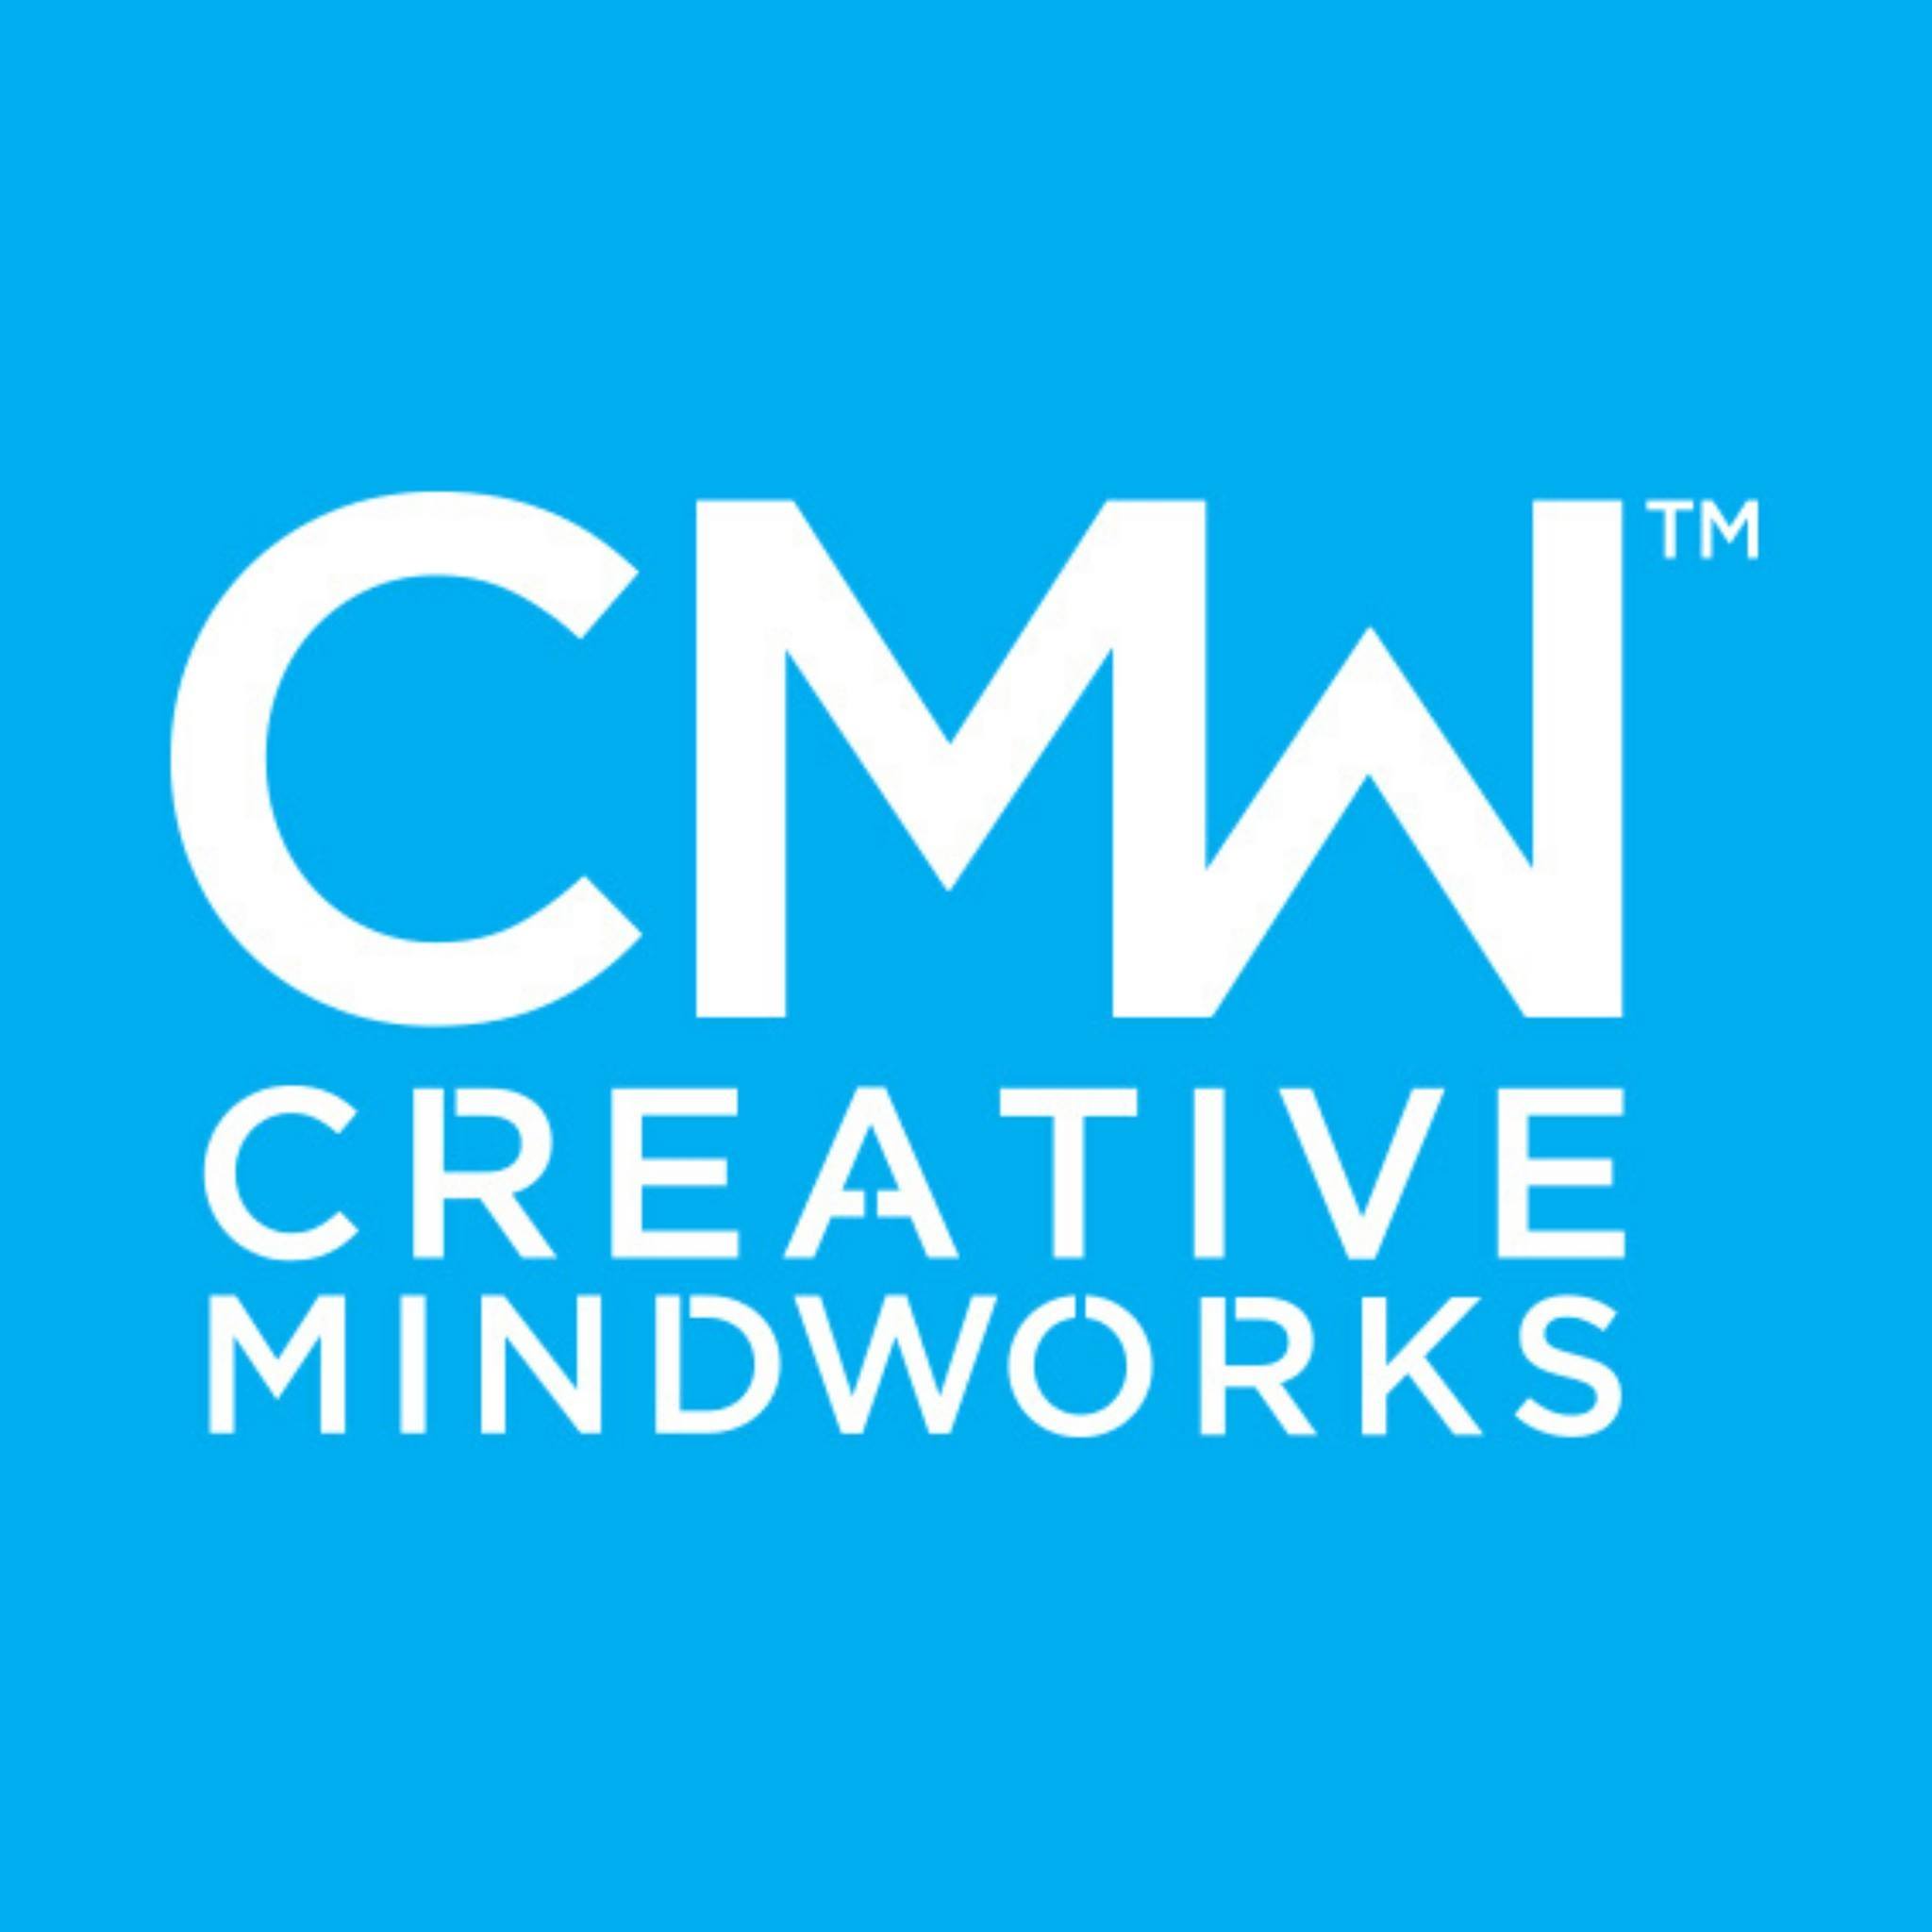 Company logo of Creative Mindworks